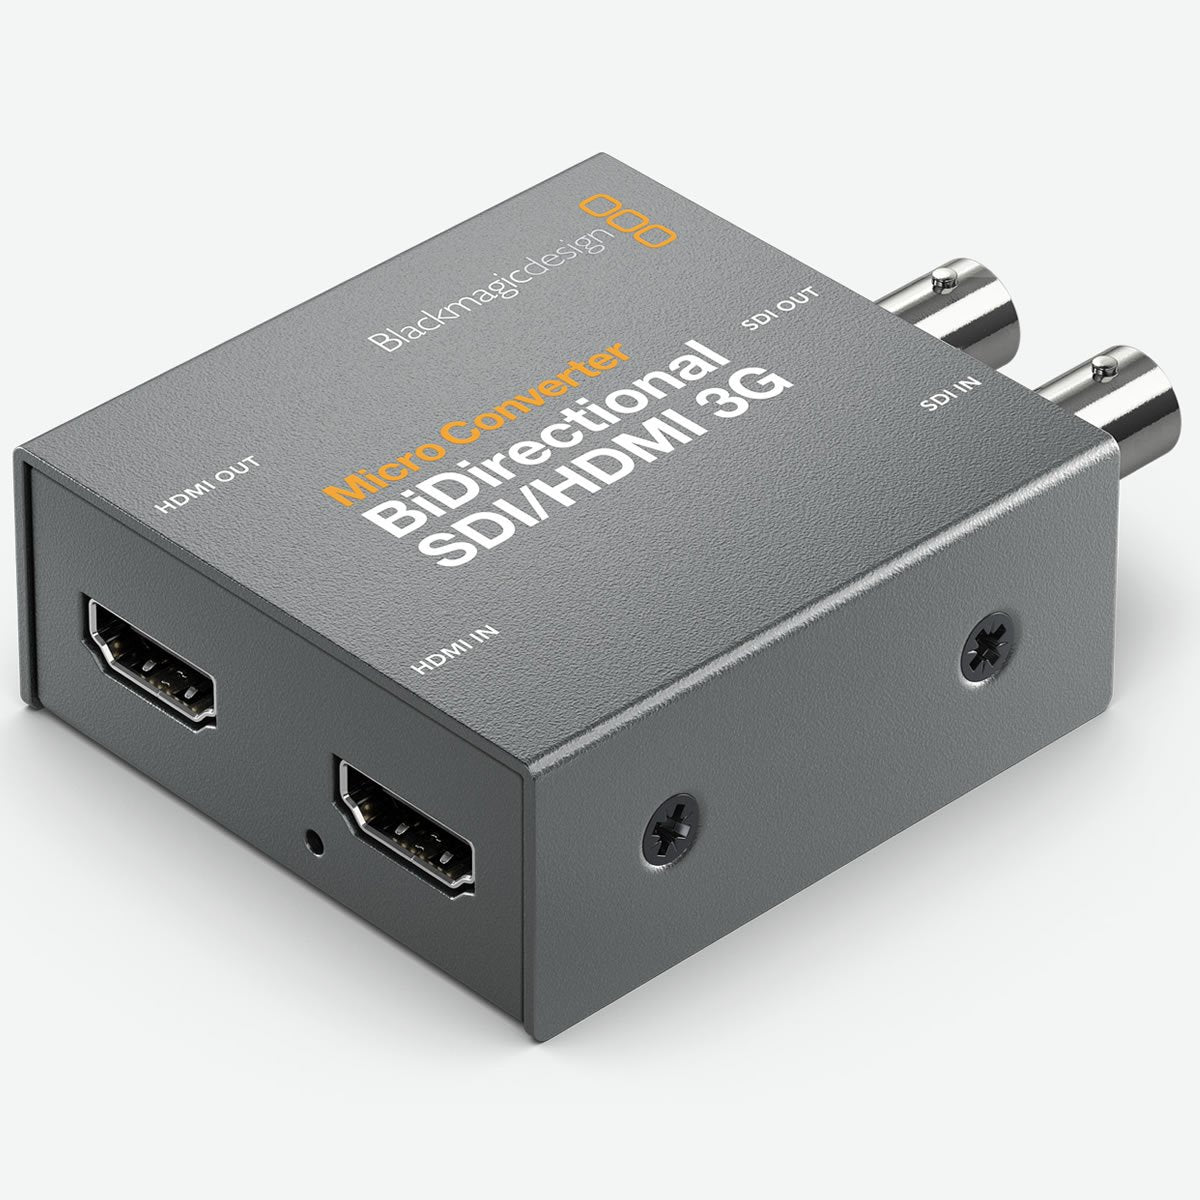 Blackmagic Design(ブラックマジックデザイン) コンバーター(ACアダプター付) Micro Converter BiDirectional SDI/HDMI 3G wPSU CONVBDC/SDI/HDMI03G/P